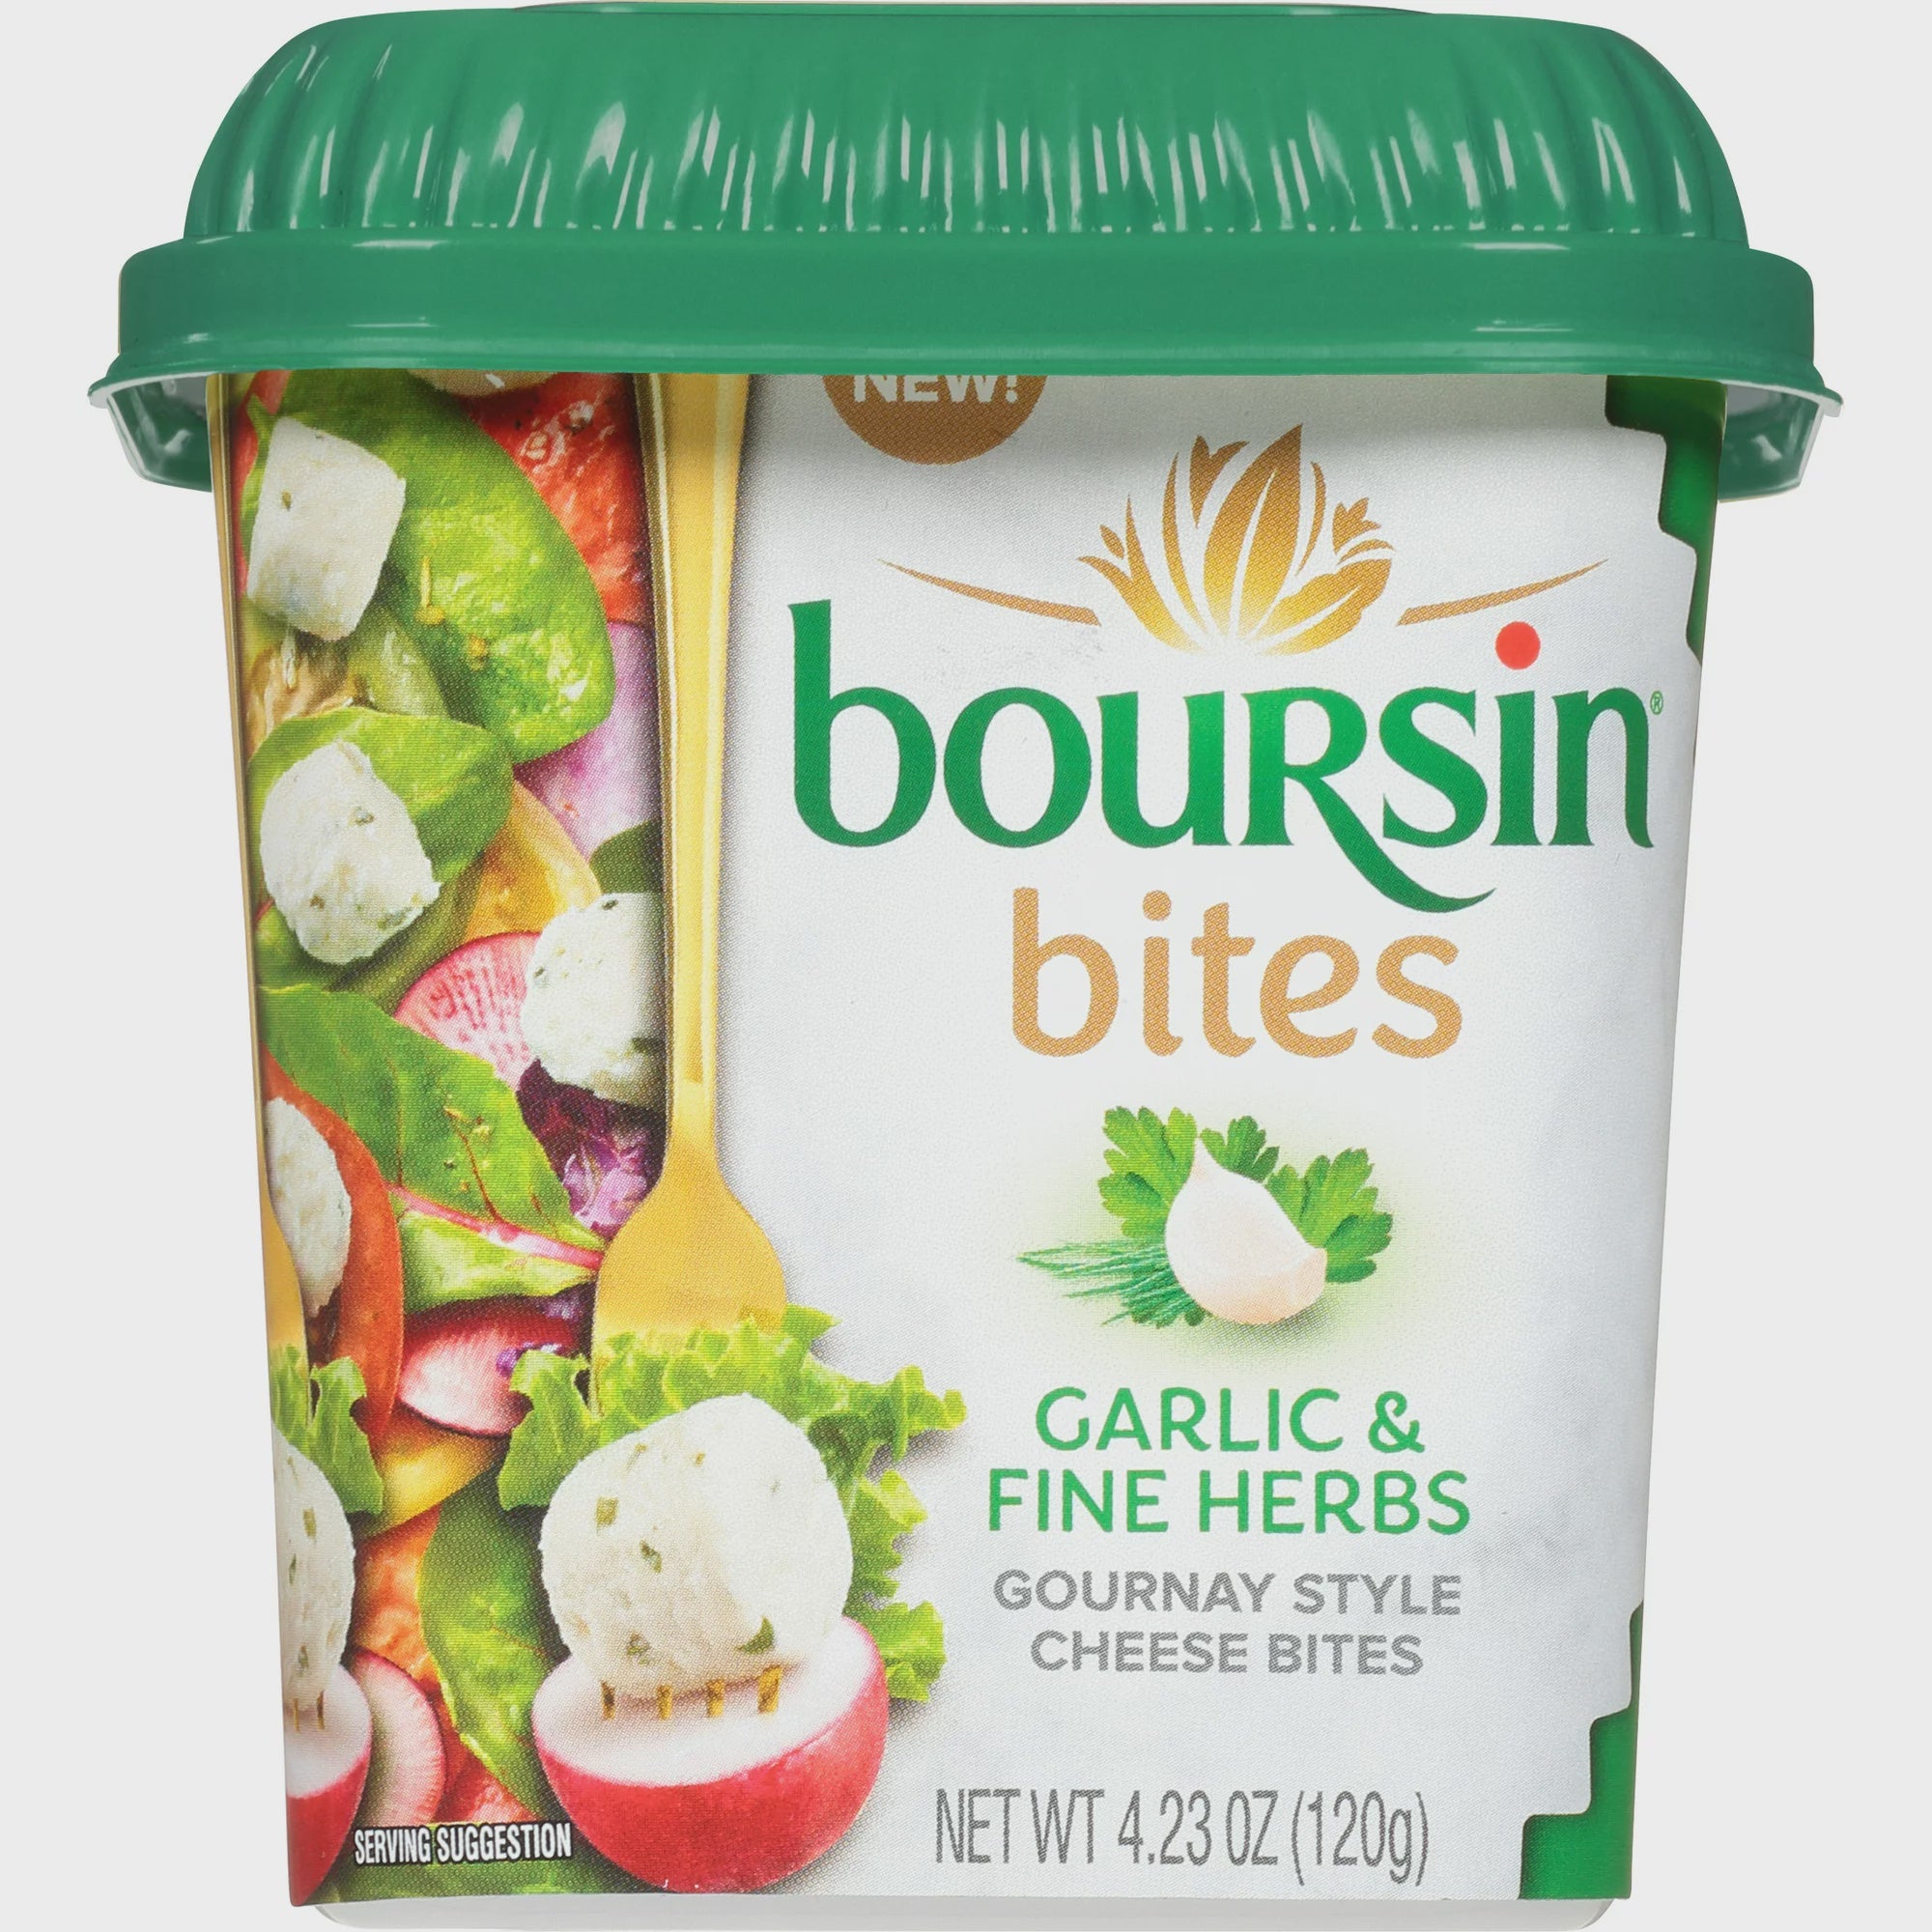 Boursin Bites Garlic & Fine Herbs Gournay Style Cheese Bites 4.23oz